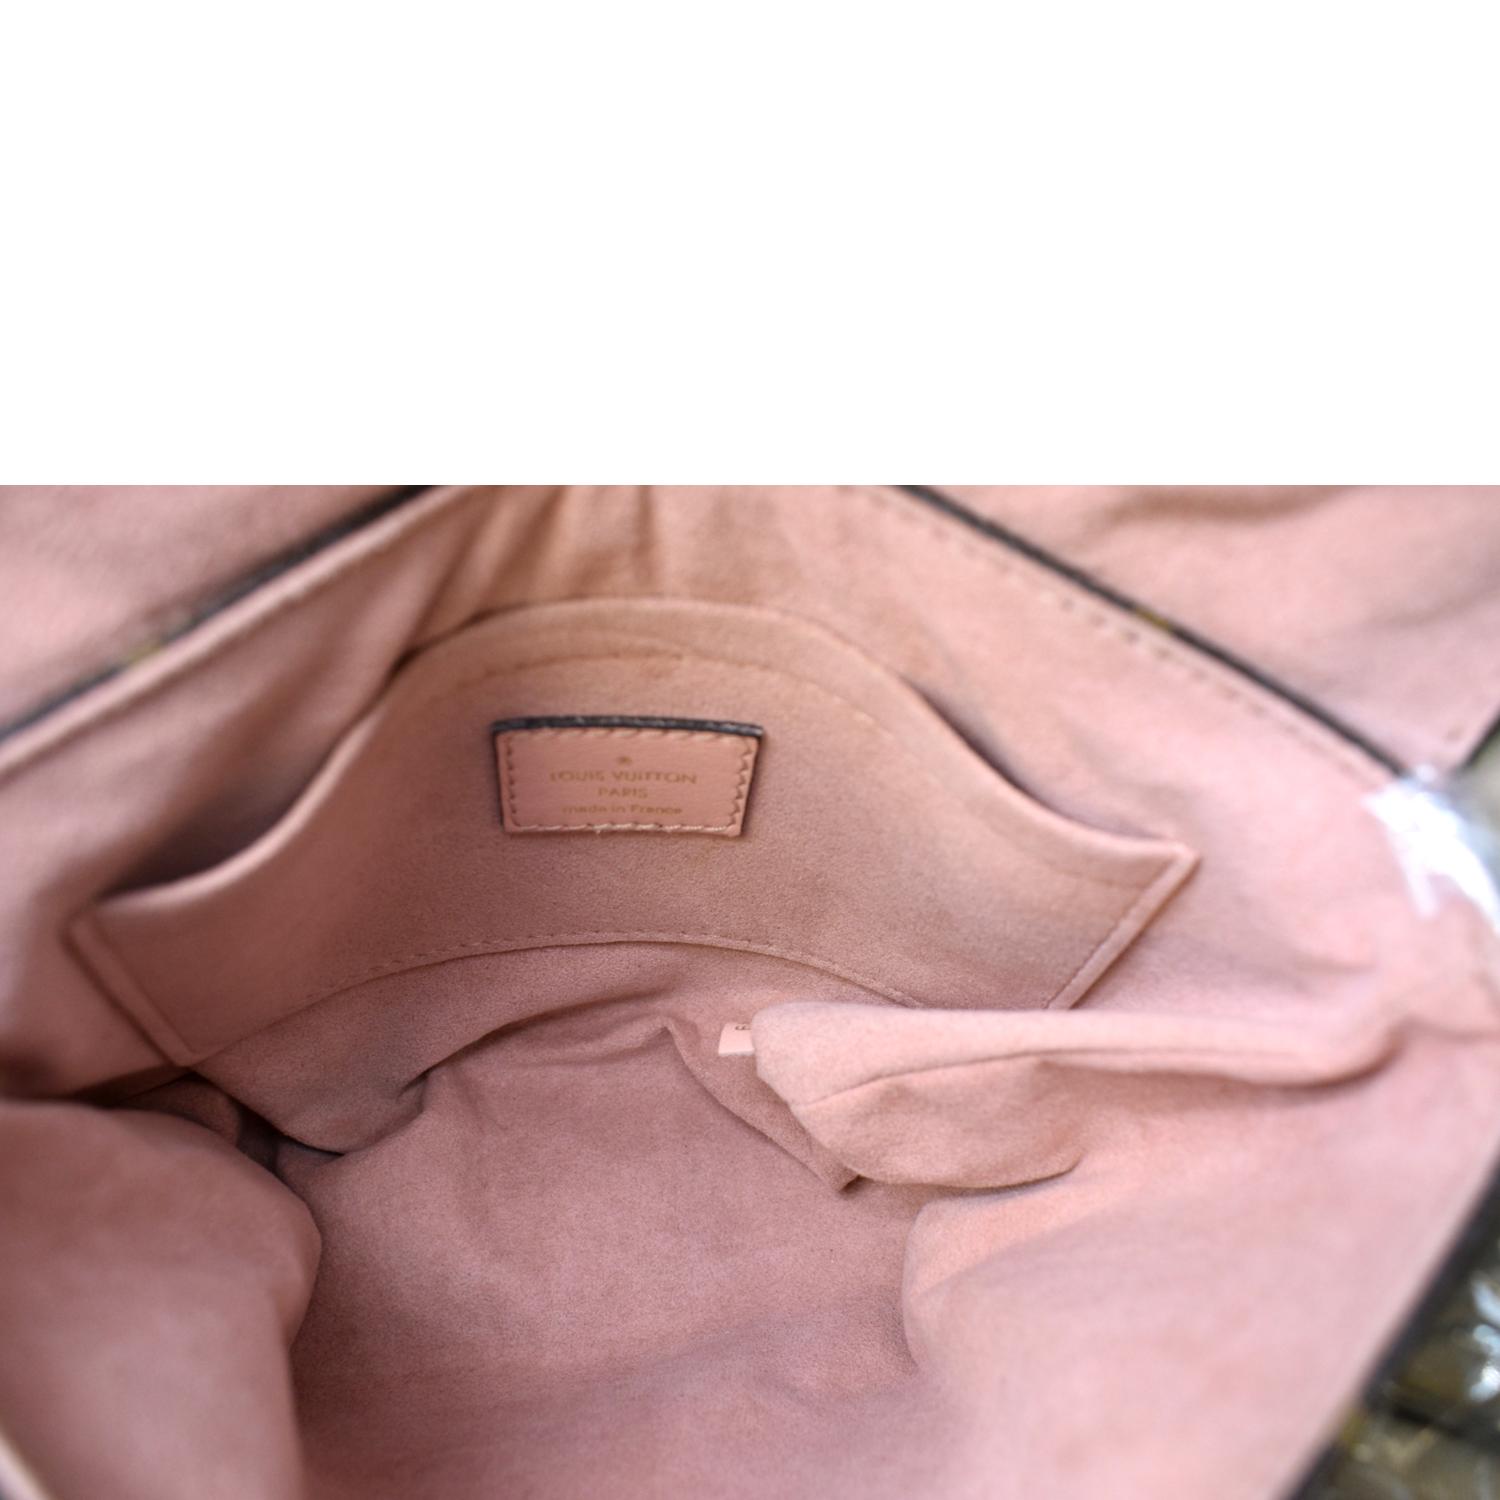 Louis Vuitton Locky Bb Pink Canvas Handbag (Pre-Owned)